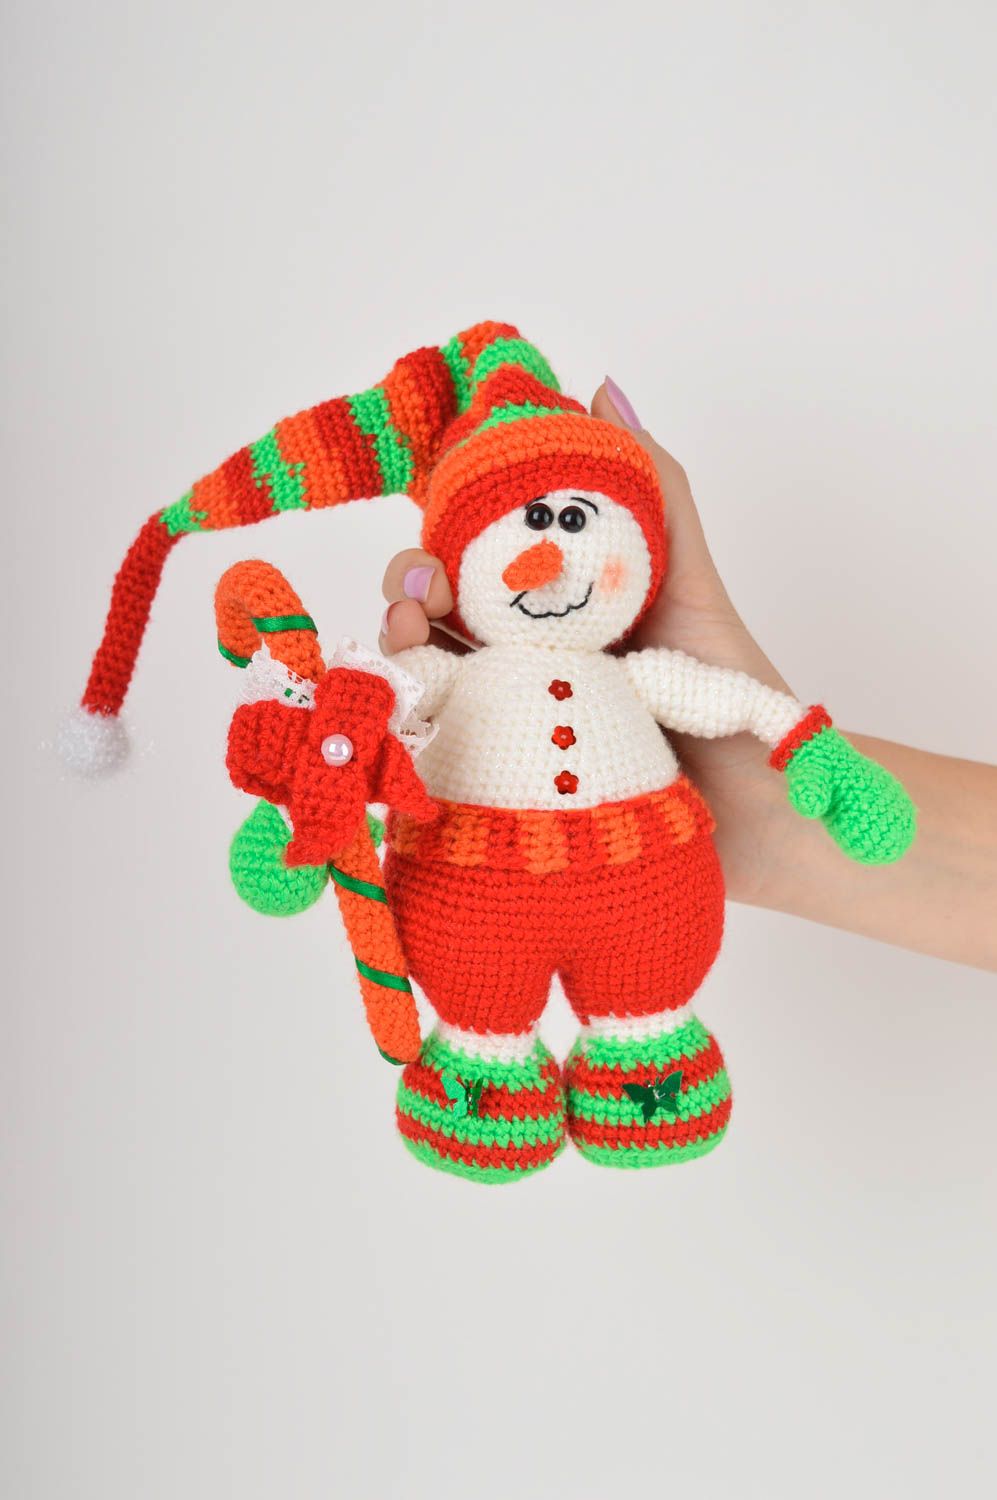 Festive toy for Christmas handmade crocheted toy for babied nursery decor photo 2